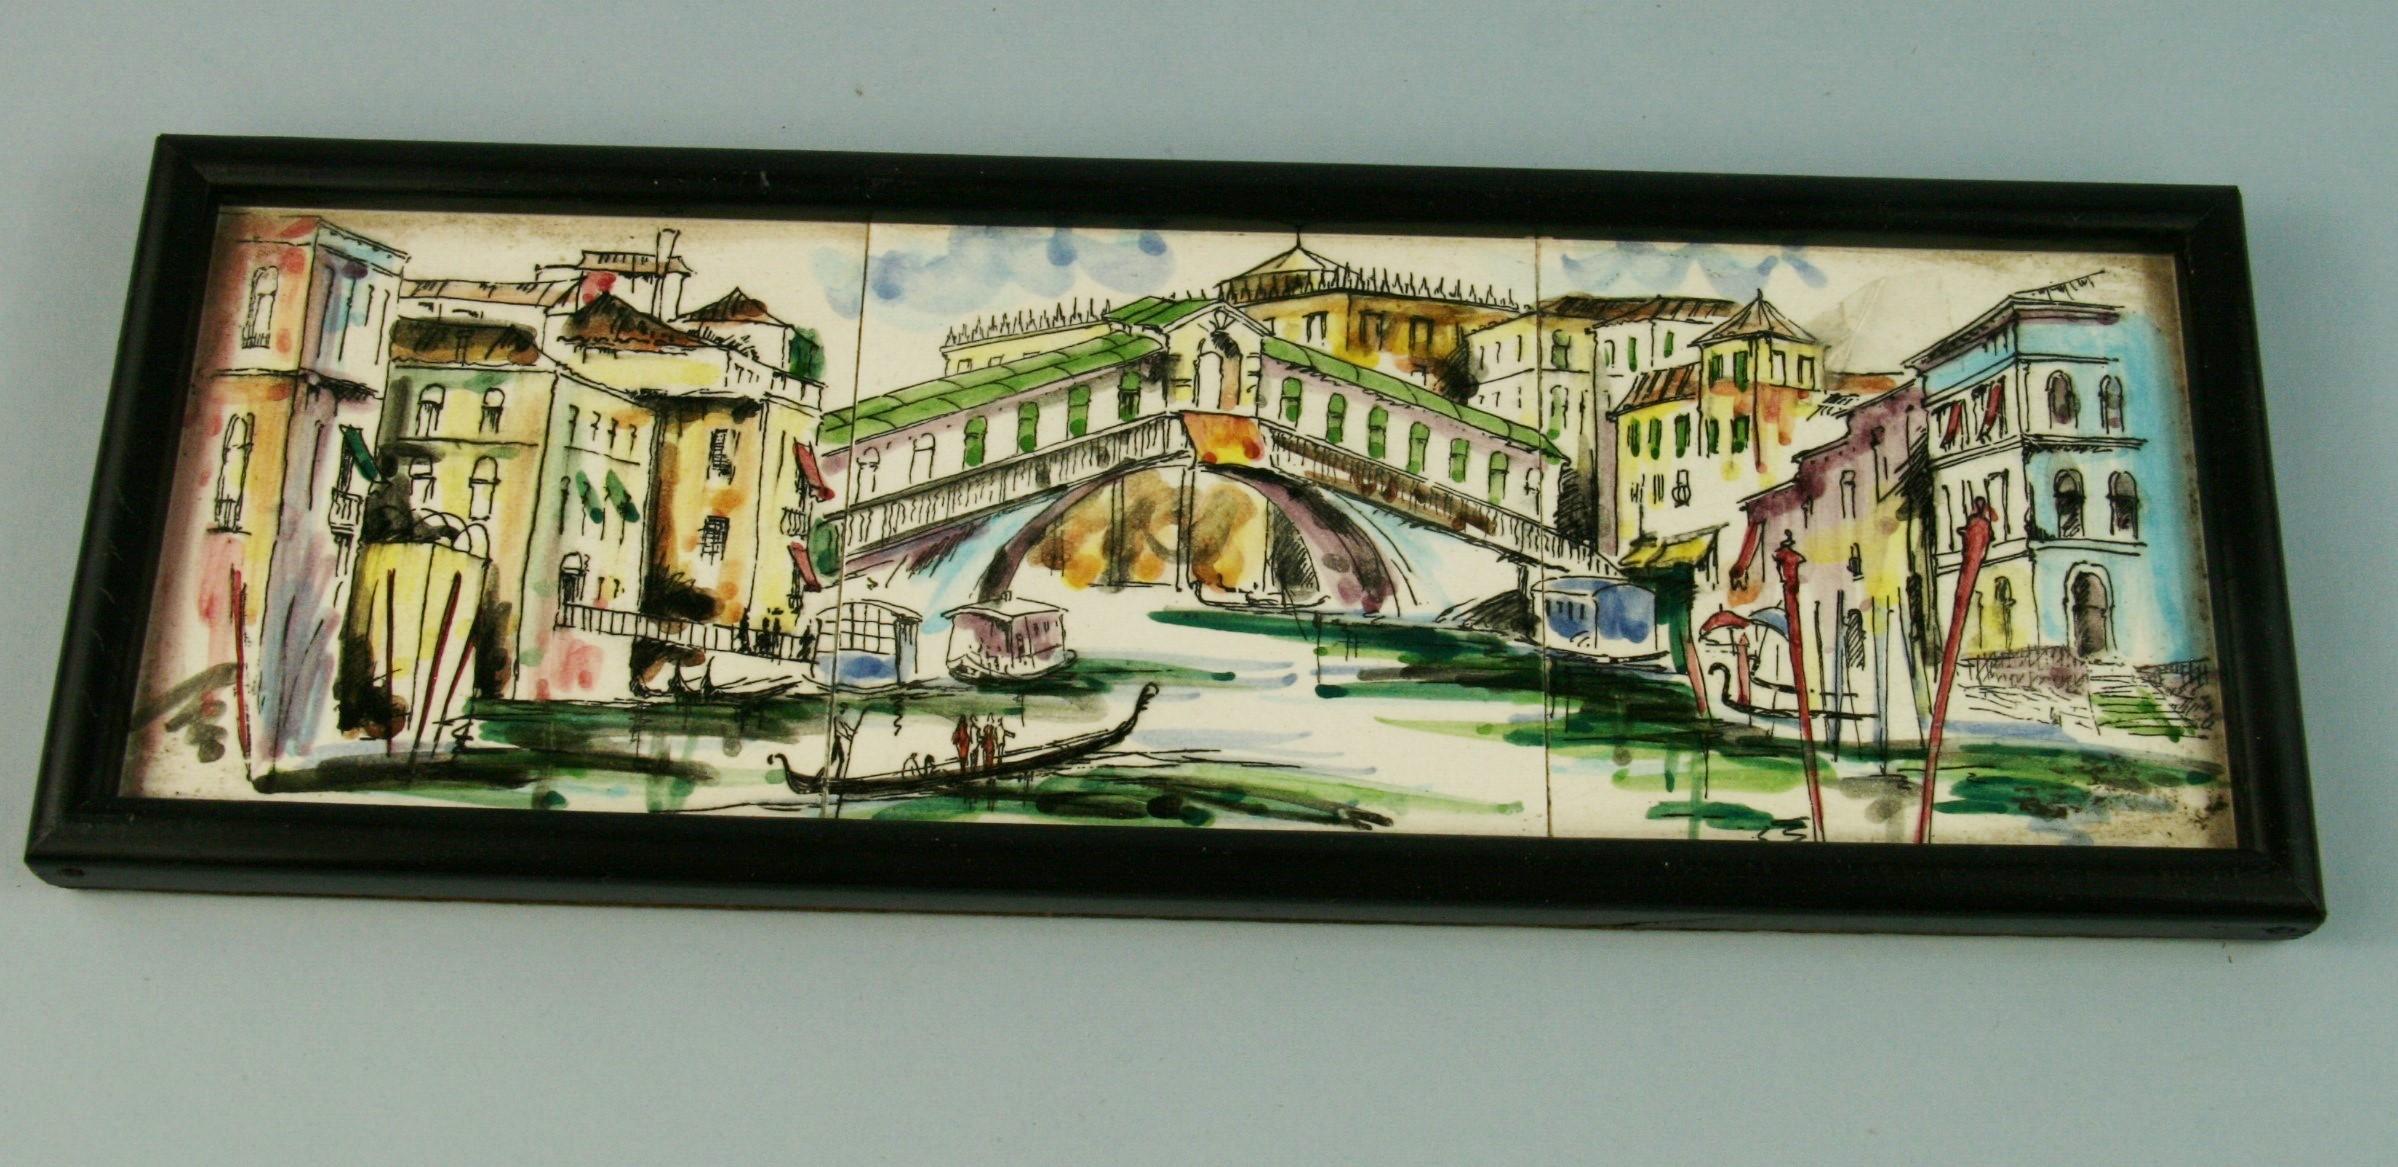 3-492 Rialto bridge Venice hand painted tiles wall plaque.